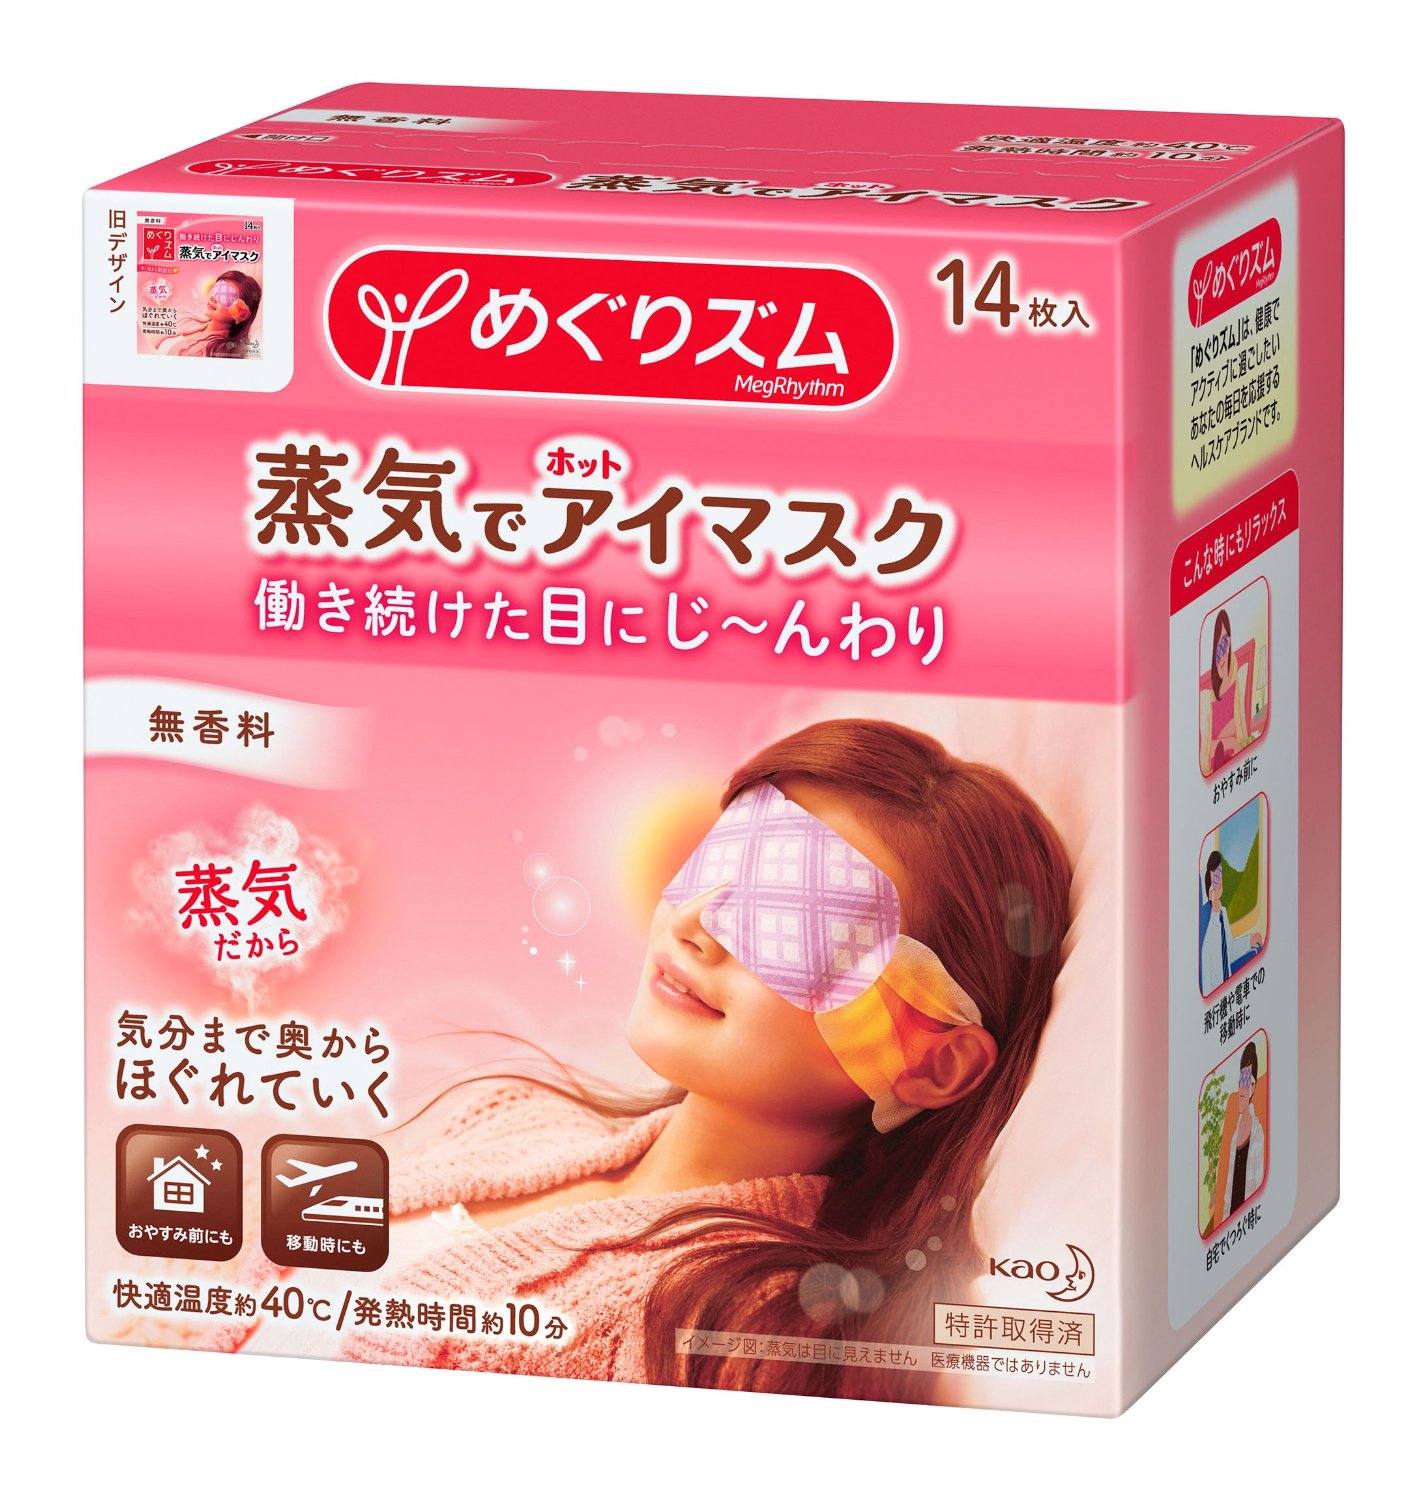 J-Fair: Megurizumu Relaxing Eye Mask